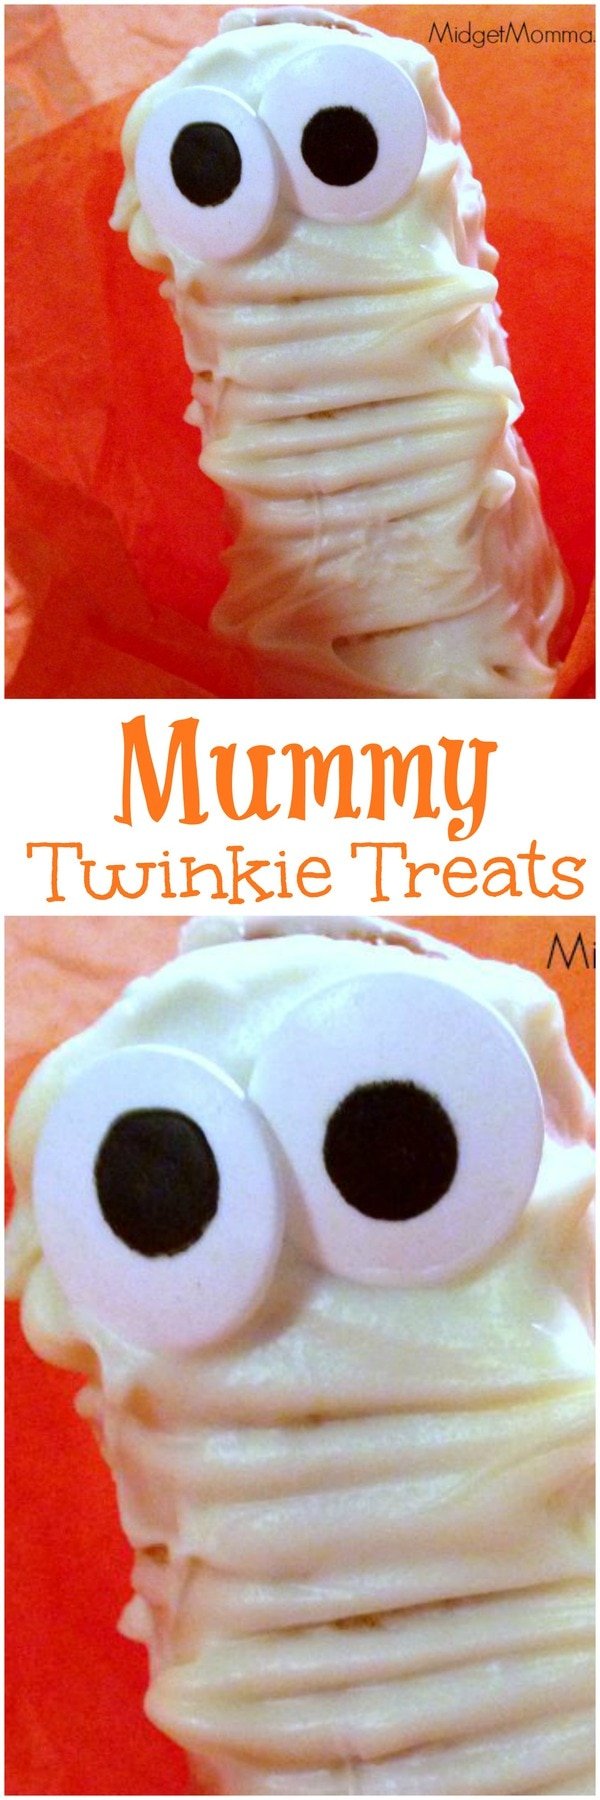 Chocolate Covered Twinkie Mummies Halloween Treat